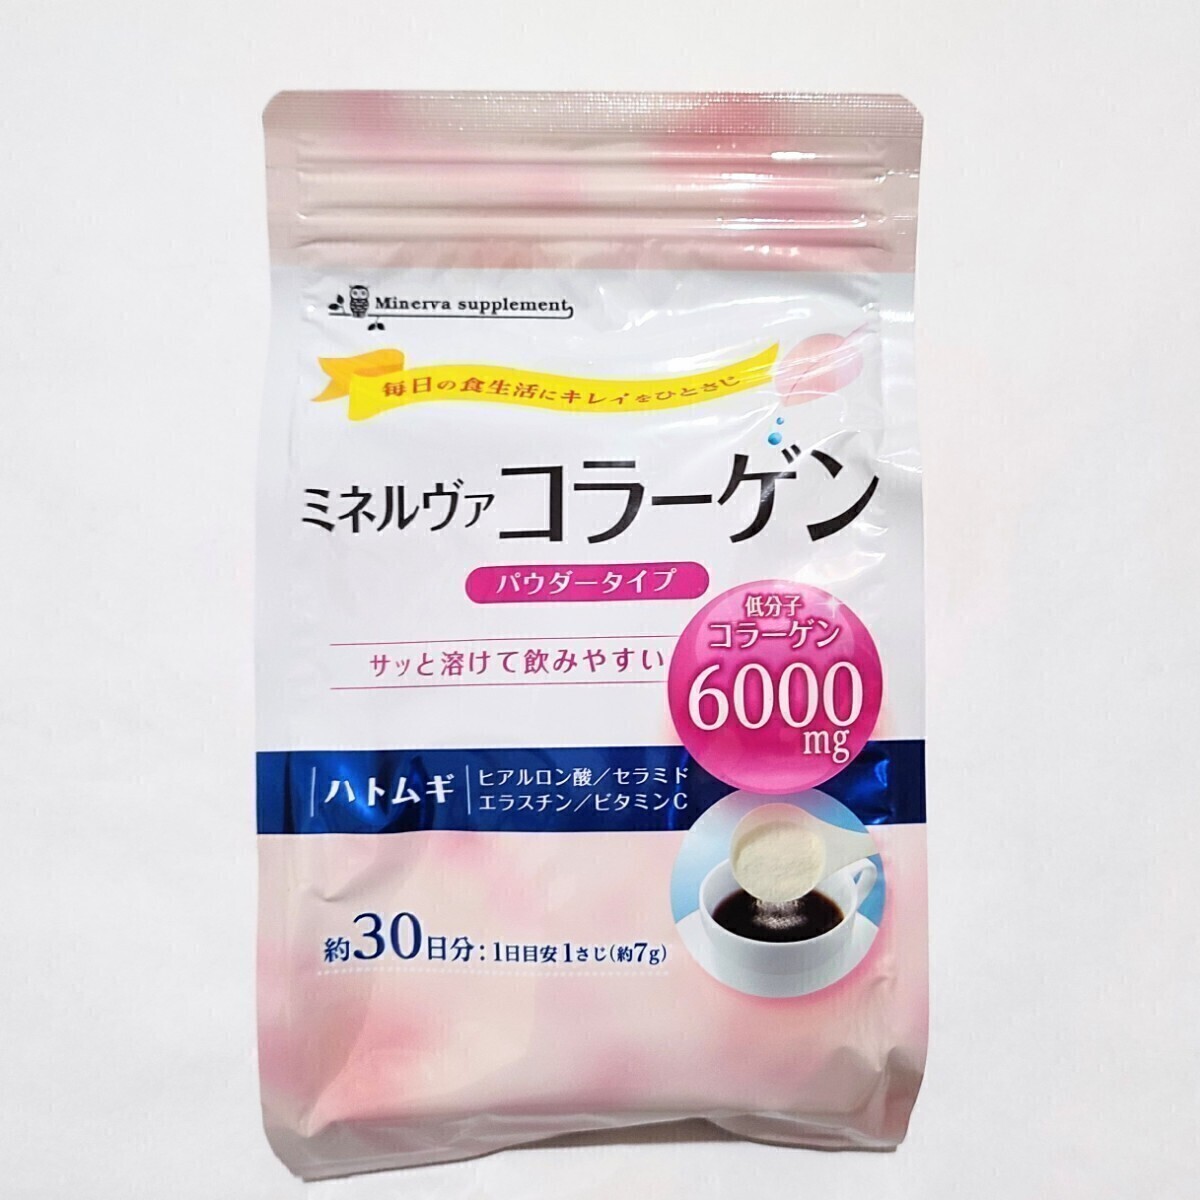  Kyoto medicines health care mi flannel va collagen collagen pe small doelas chin pe small do supplement supplement nipi collagen 100